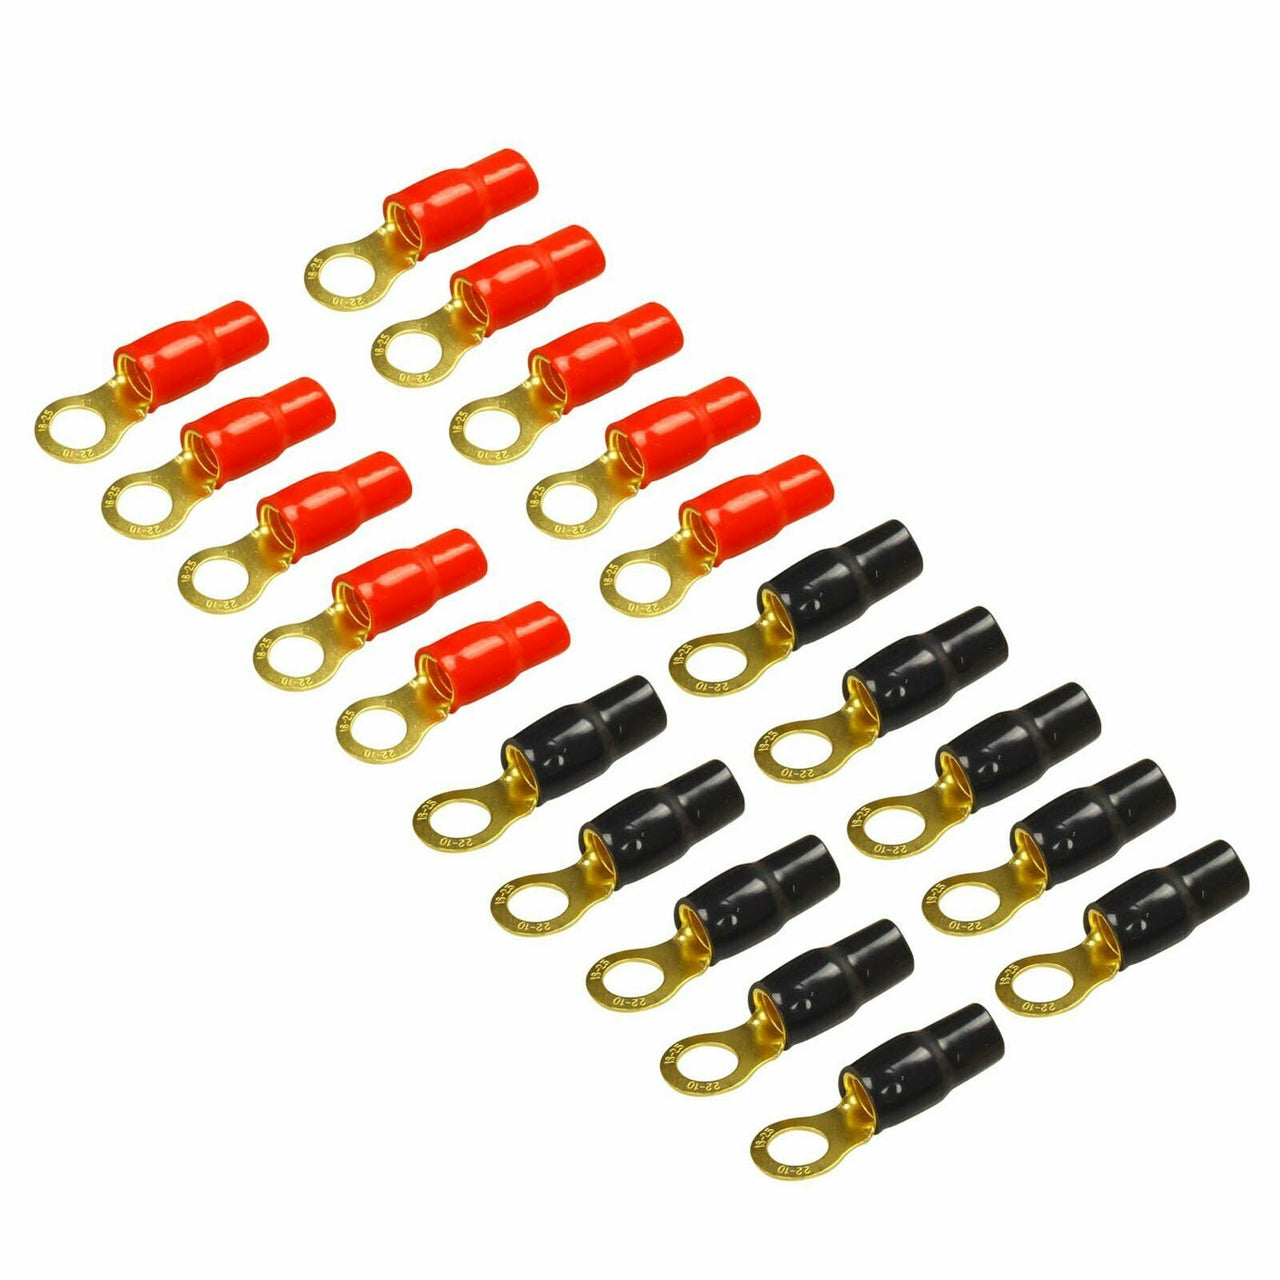 Absolute GRT4-20 4 Gauge Crimp Ring Terminals Connectors 20-Pack (Red Black)